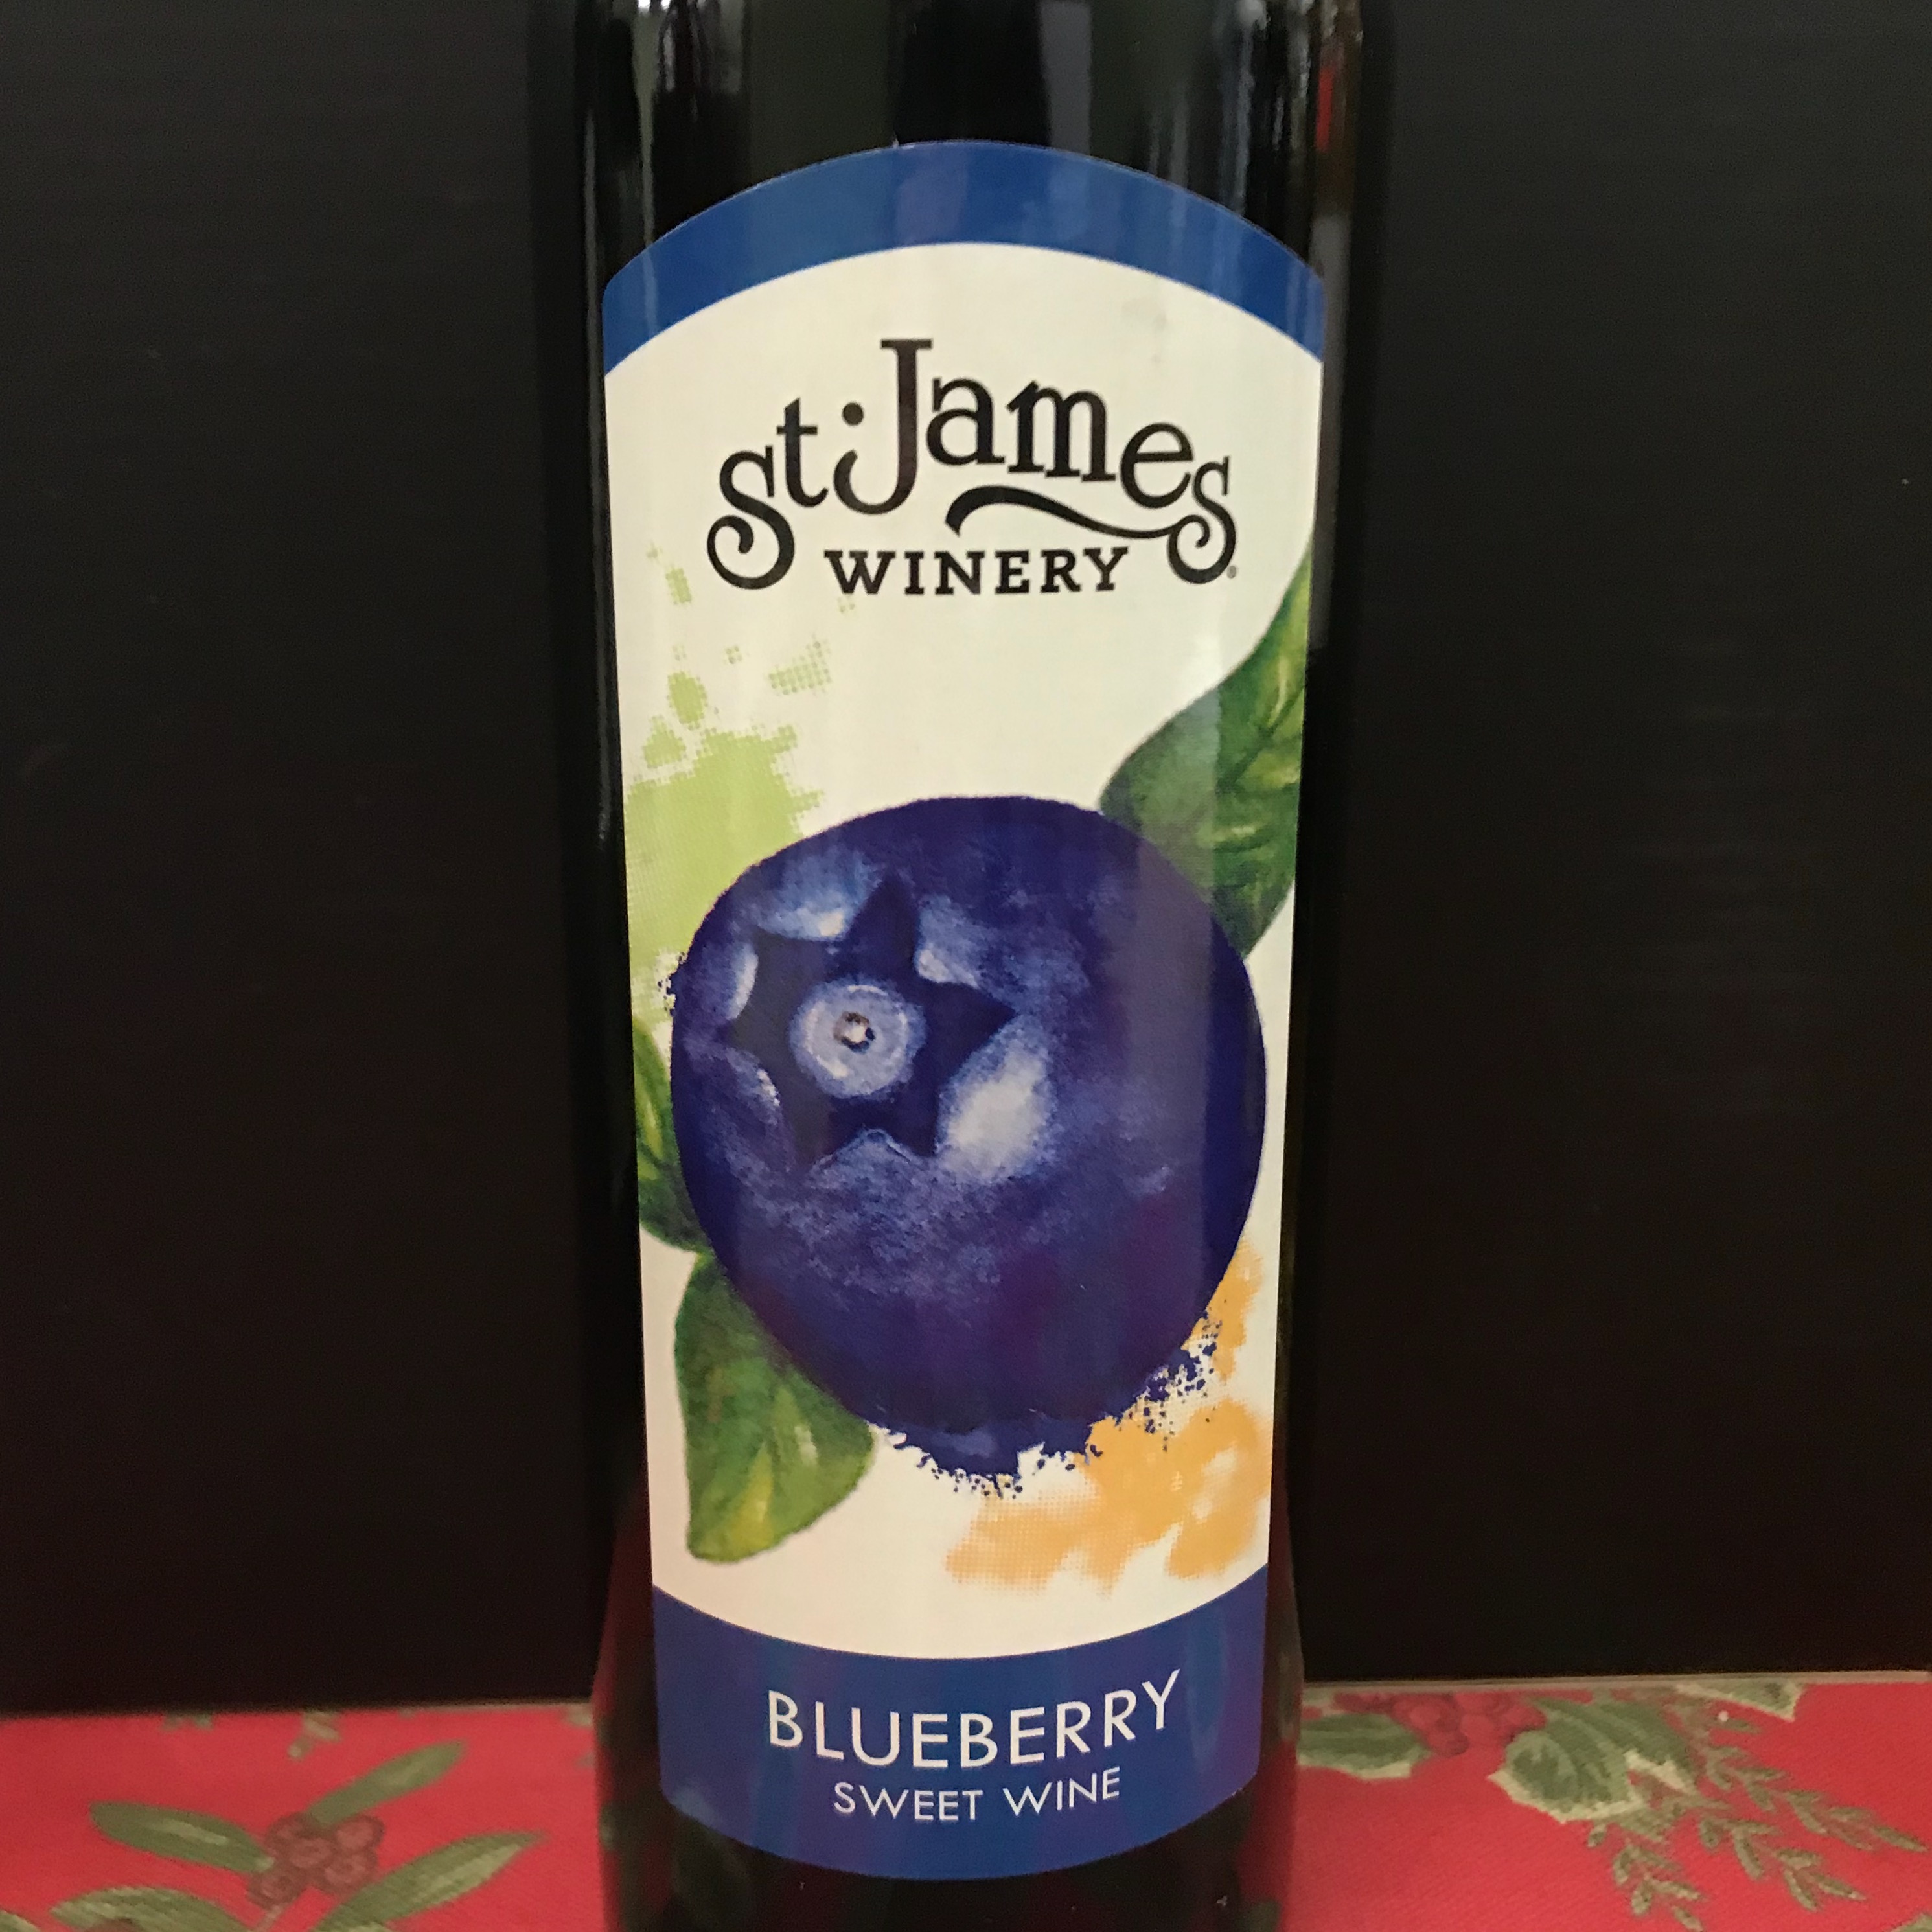 St.James Winery Blueberry sweet wine